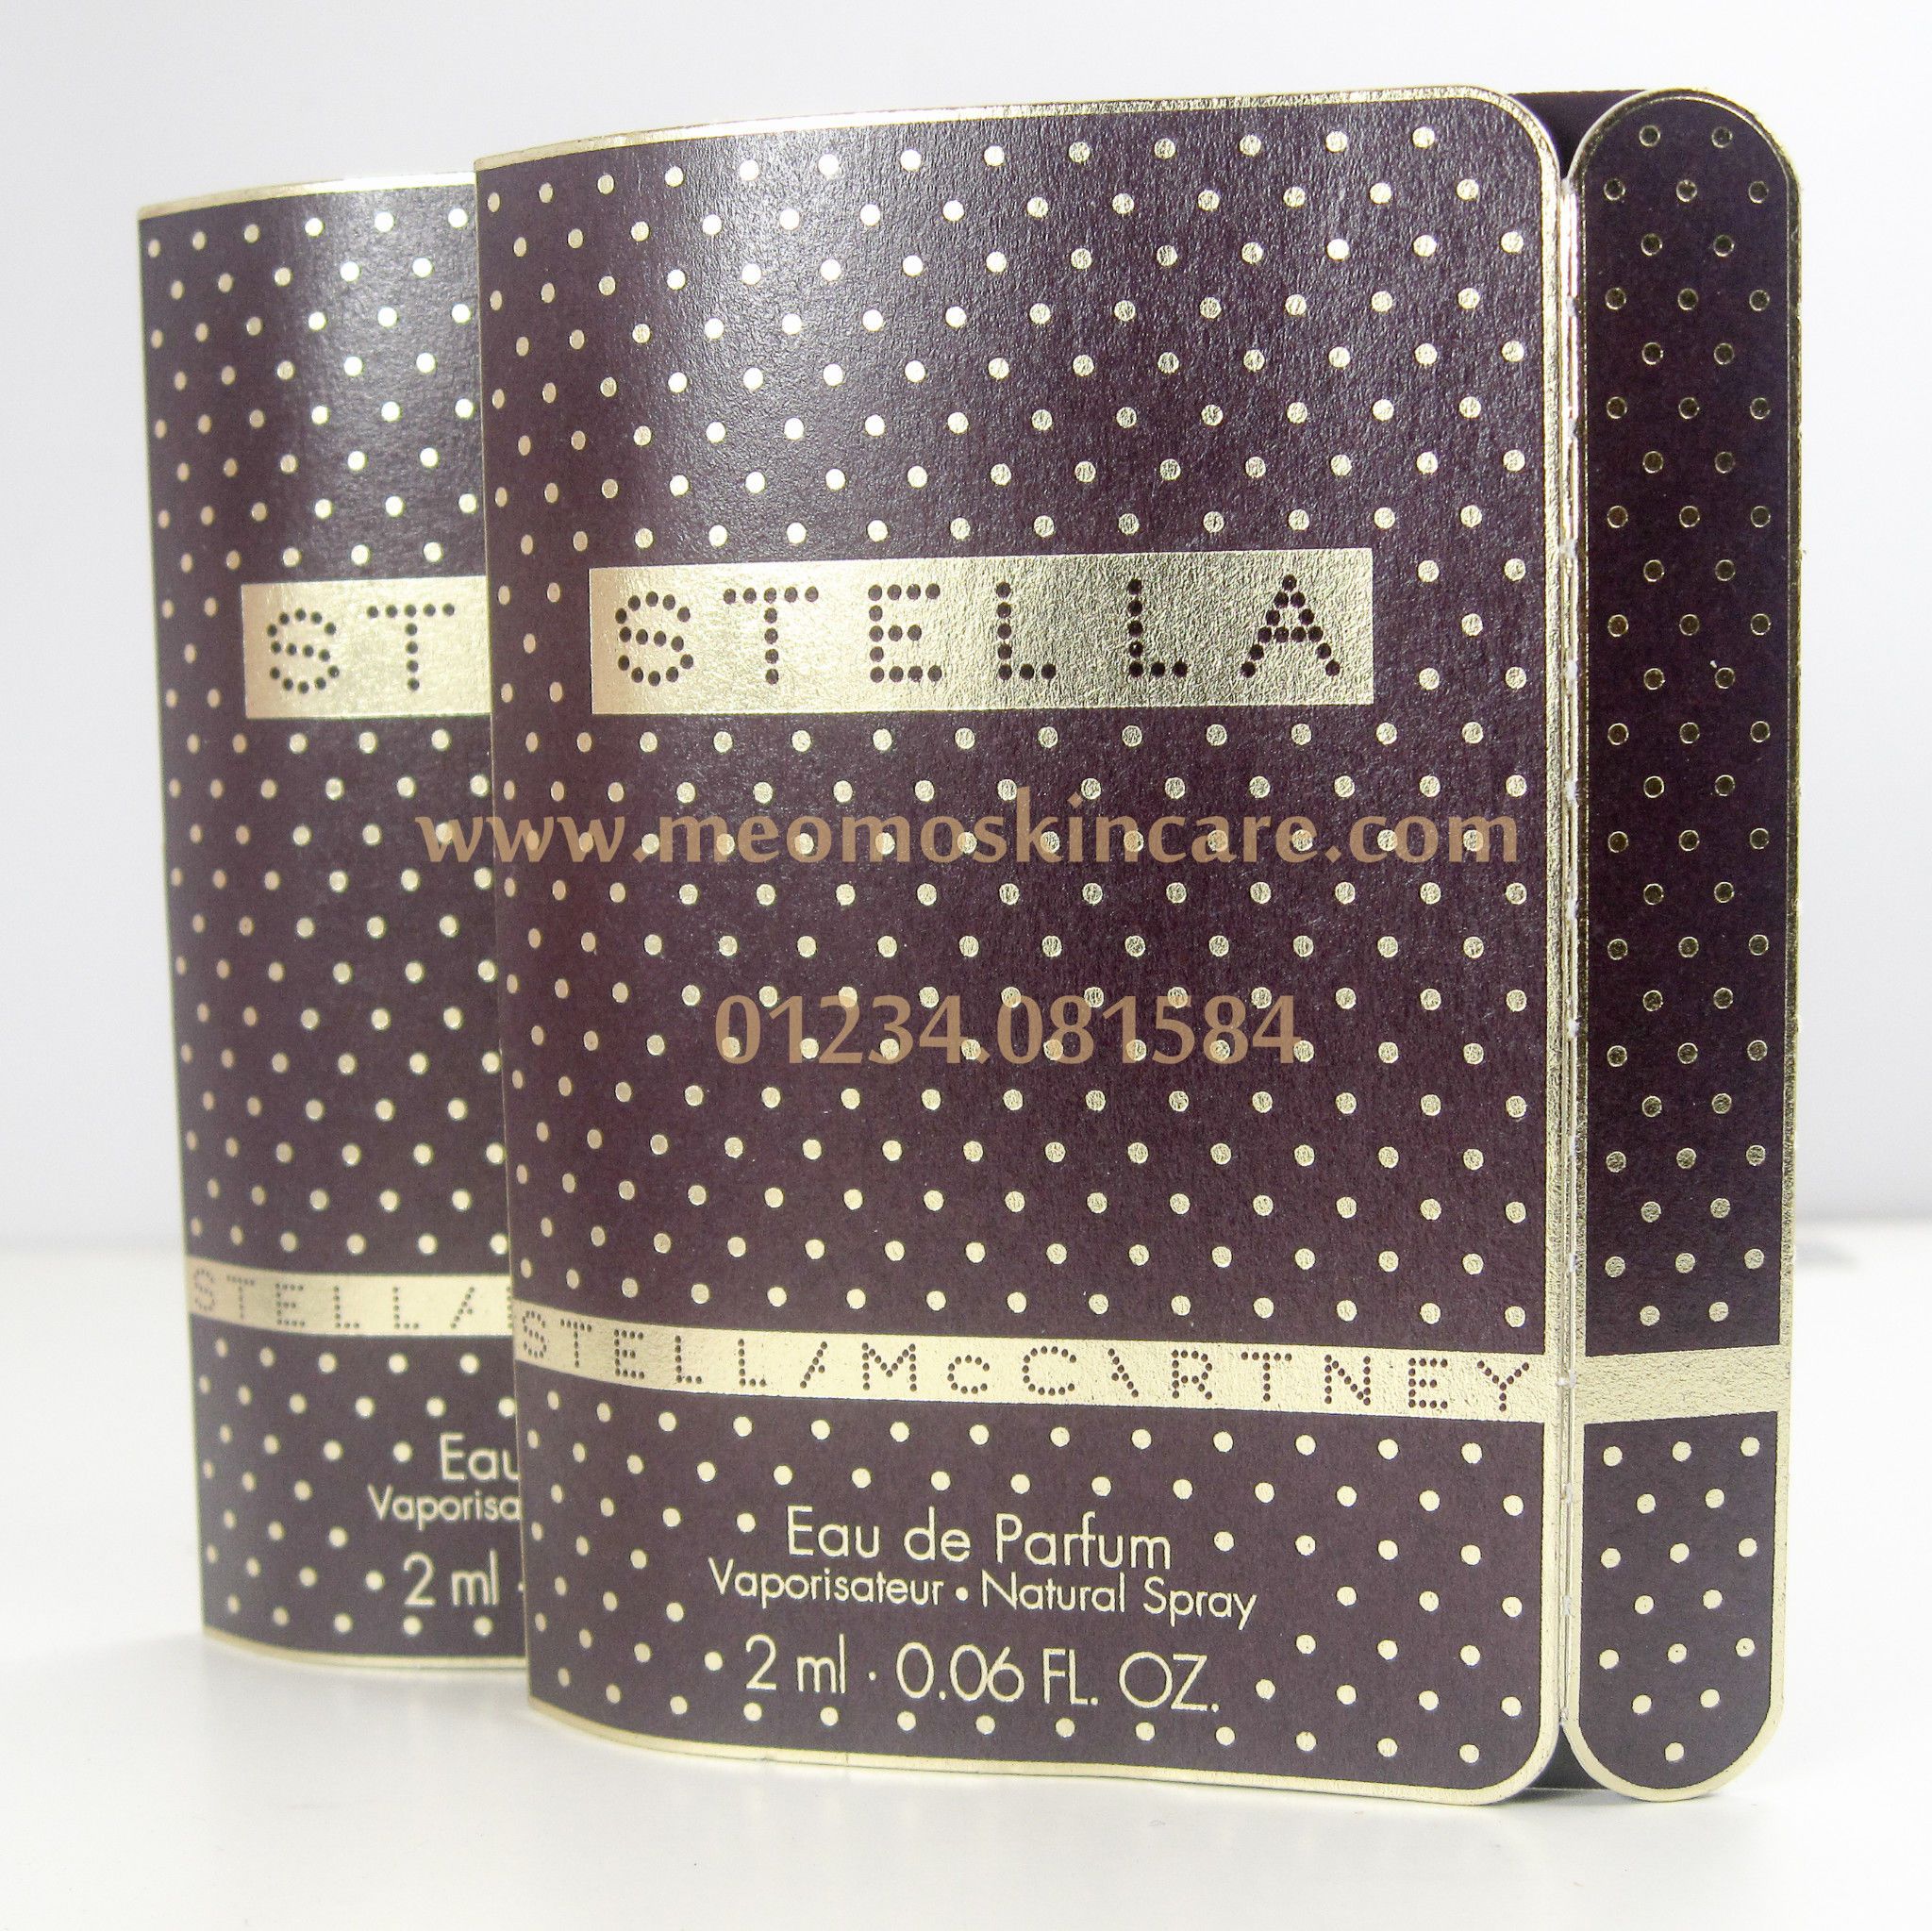 Stella - Stella/McCartney - 2ml